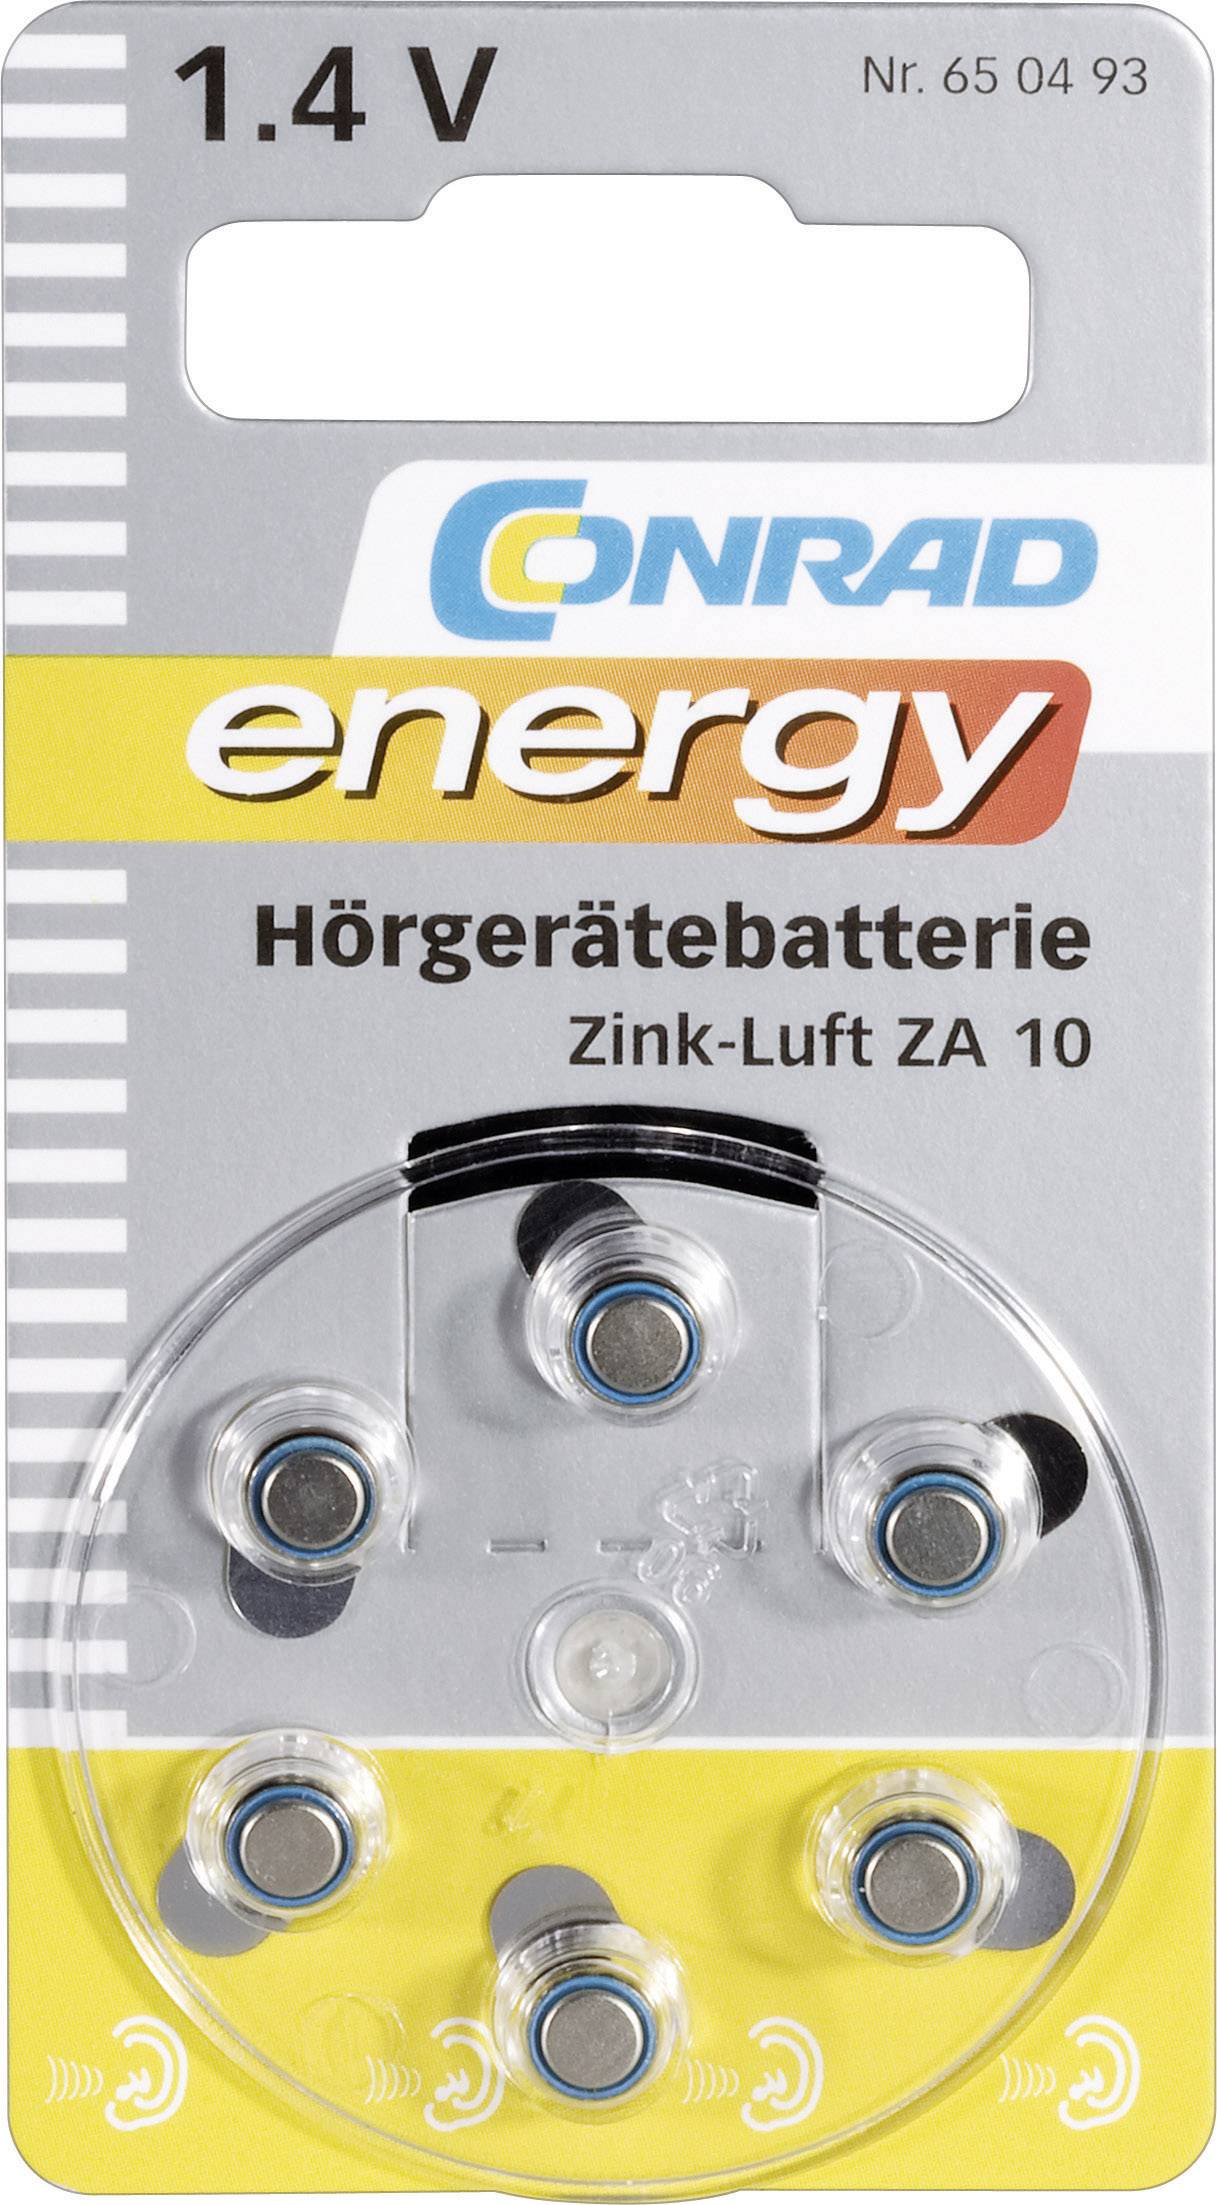 CONRAD Knopfzelle ZA 10 Zink-Luft Conrad energy PR70 Hörgerätebatterie 90 mAh 1.4 V 6 St.